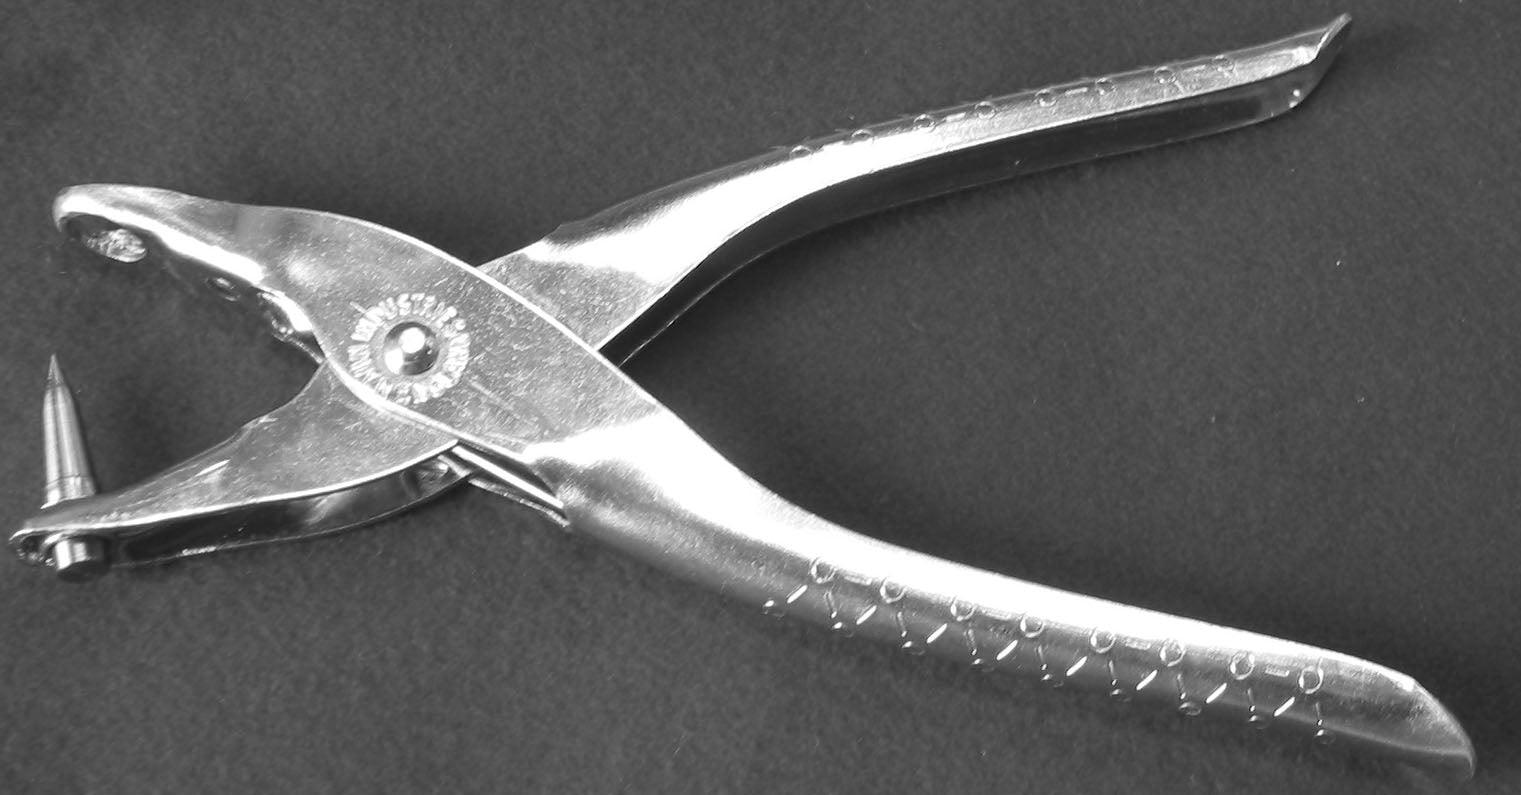 C.S. Osborne Eyelet Pliers Remover # 256 - Alan Richard Textiles, LTD C.S. Osborne, C.S. Osborne Leather Punches, C.S. Osborne Rivets & Eyelets Setters